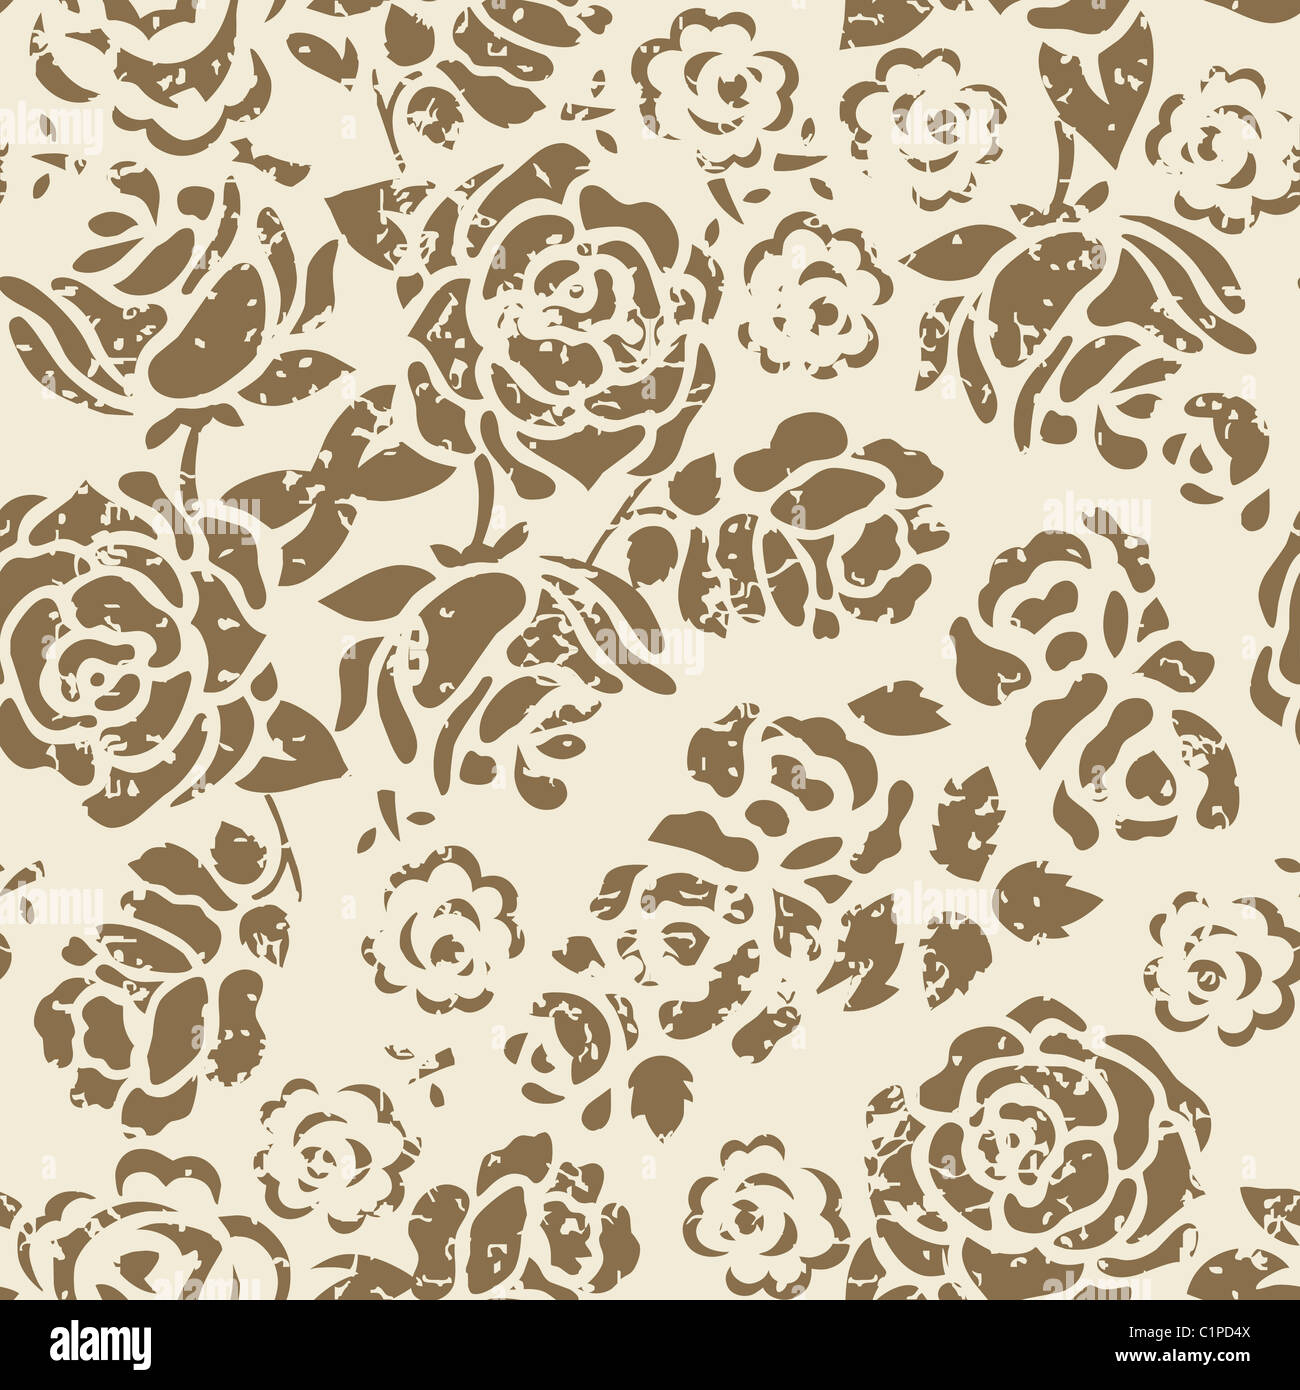 Grunge Seamless Floral Pattern Stock Photo